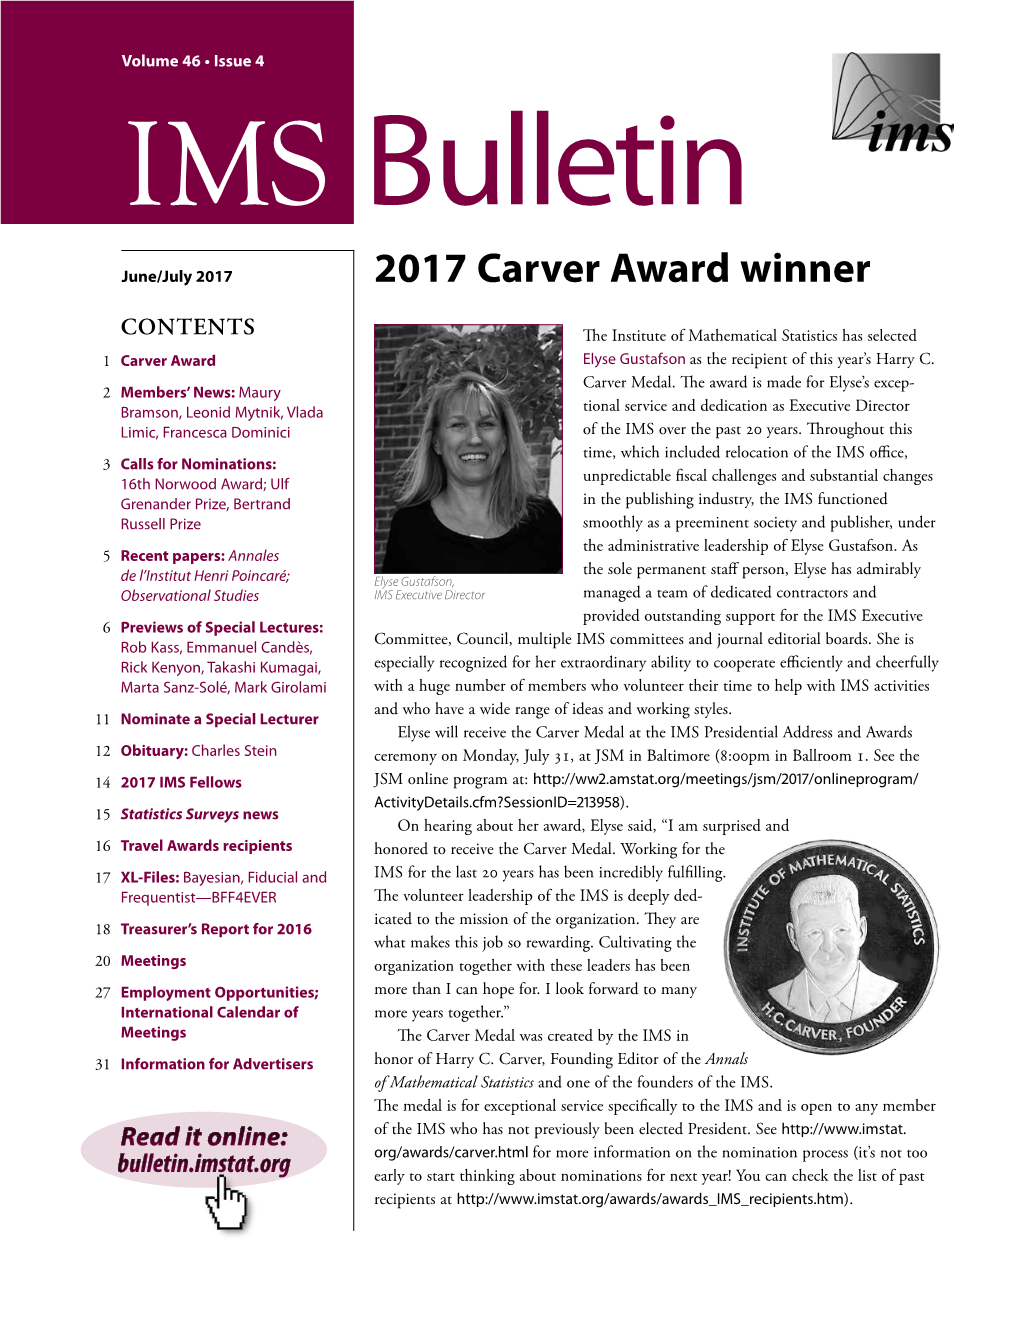 IMS Bulletin 46(4)